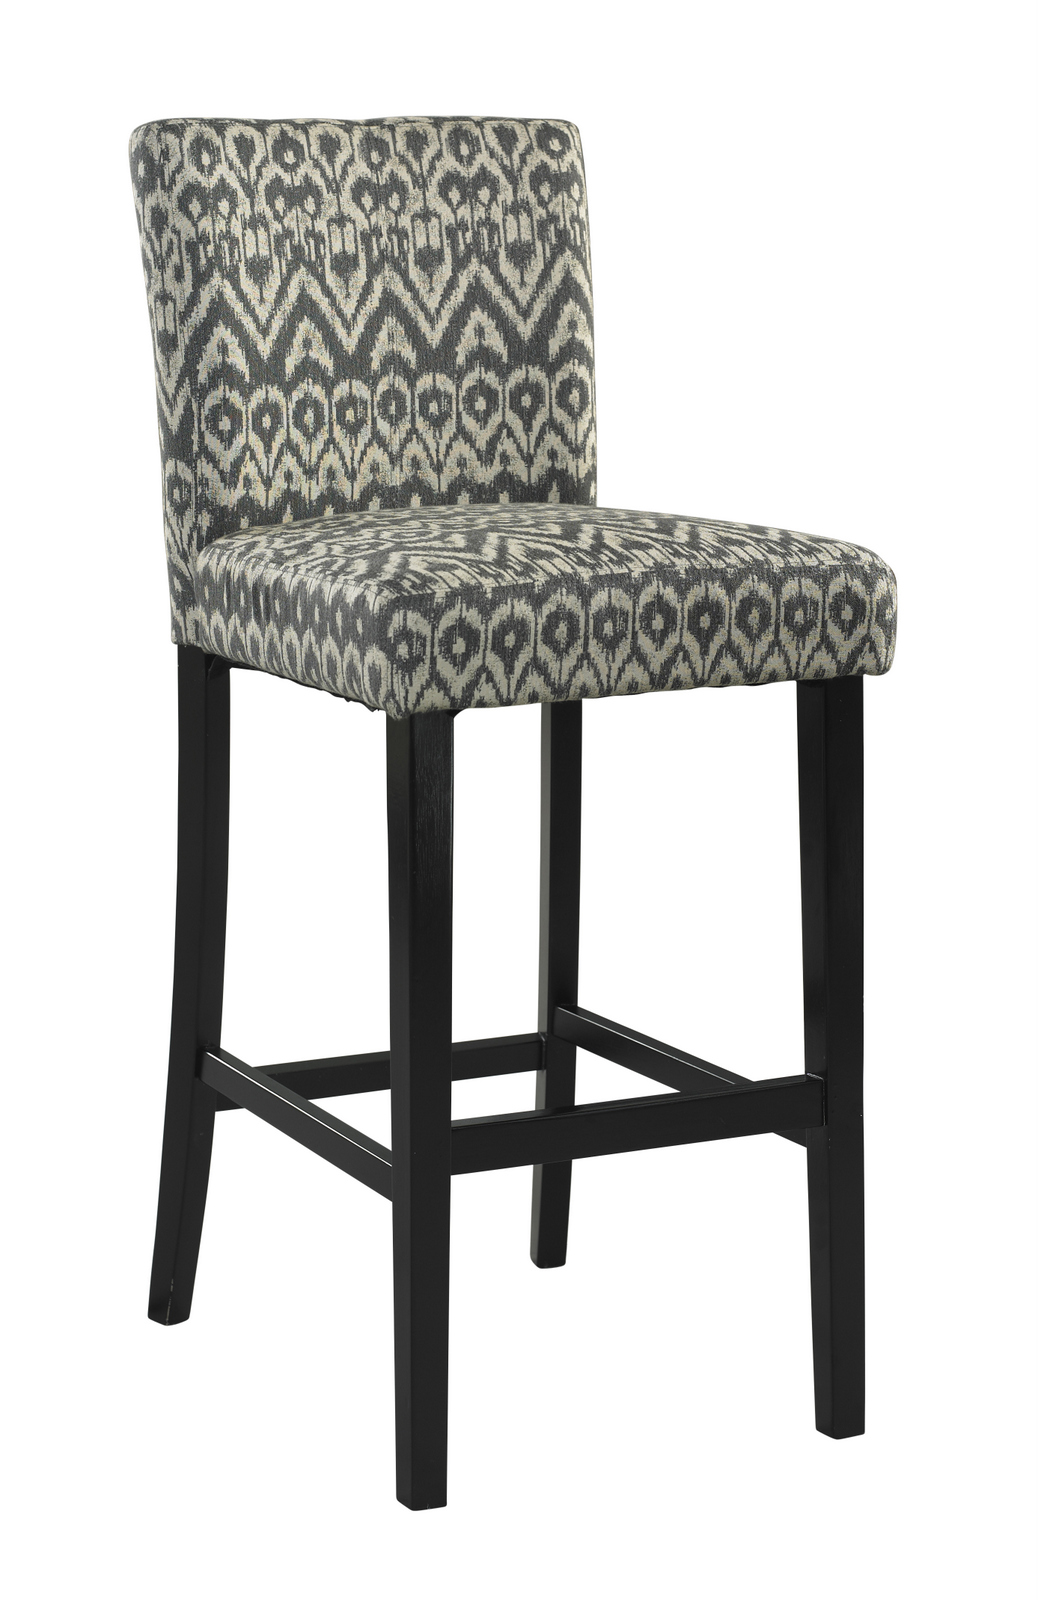 Furnituremaxx Morocco Solid Wood & Cushion Seat Bar Stool - Driftwood